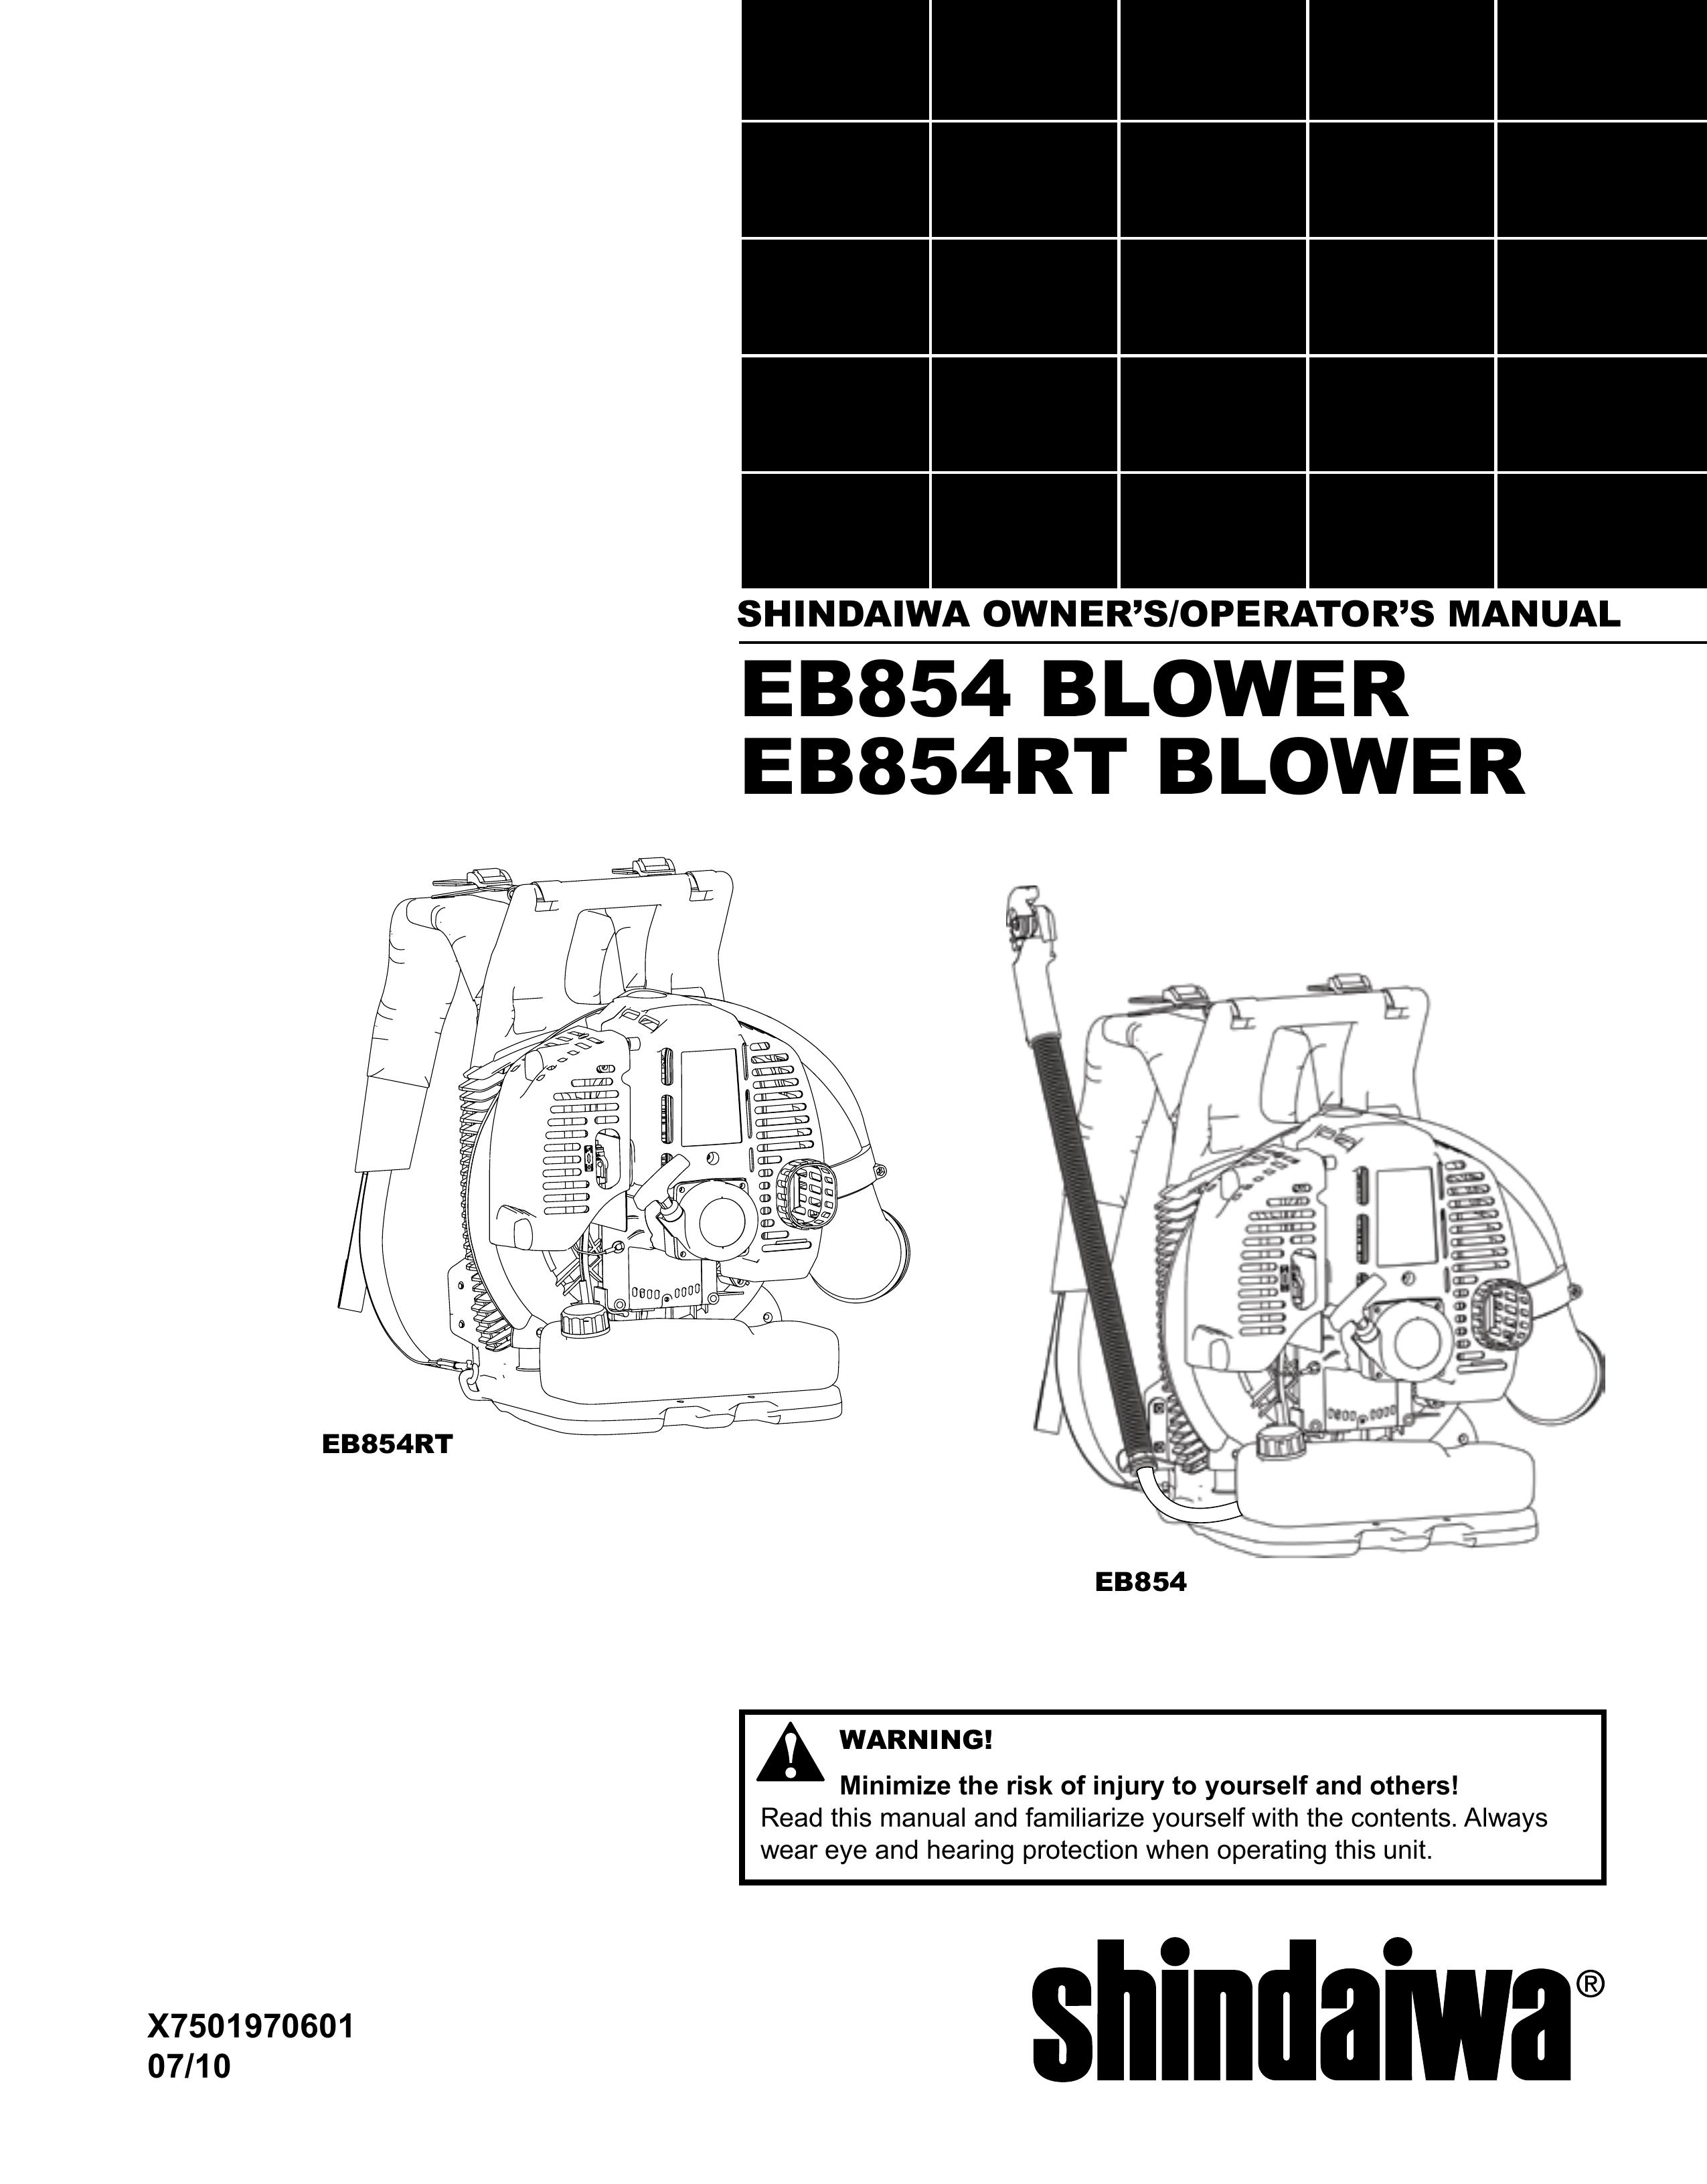 Shindaiwa EB854RT Blower User Manual